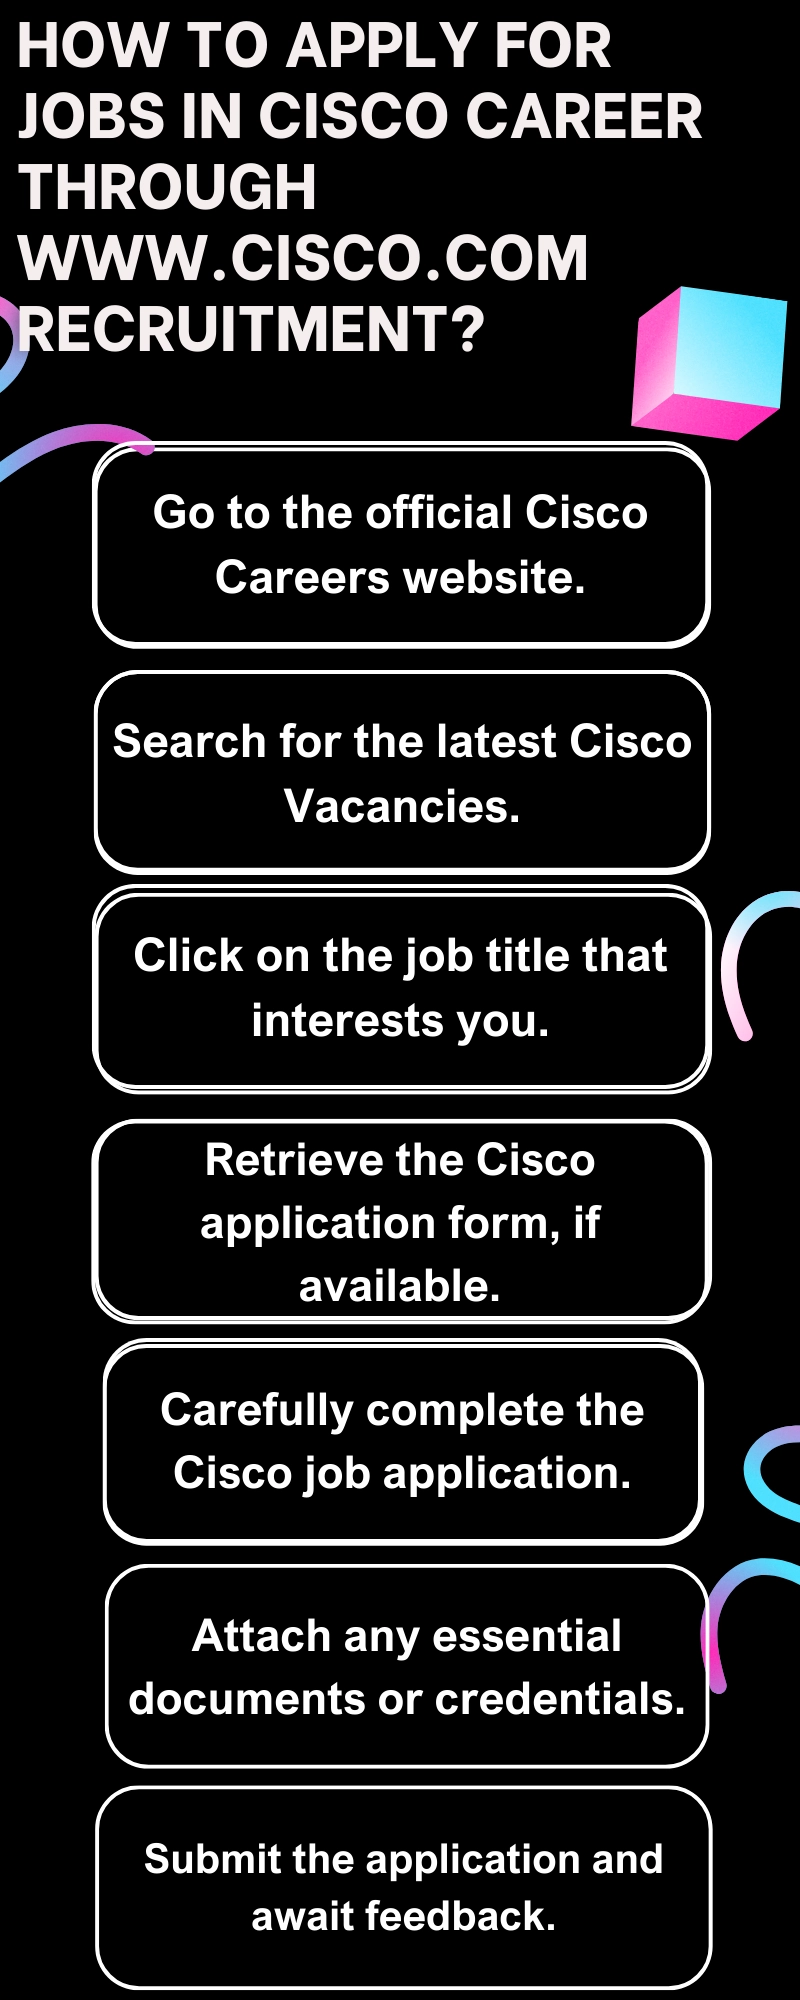 How to Apply for Jobs in Cisco Career through www.cisco.com recruitment?